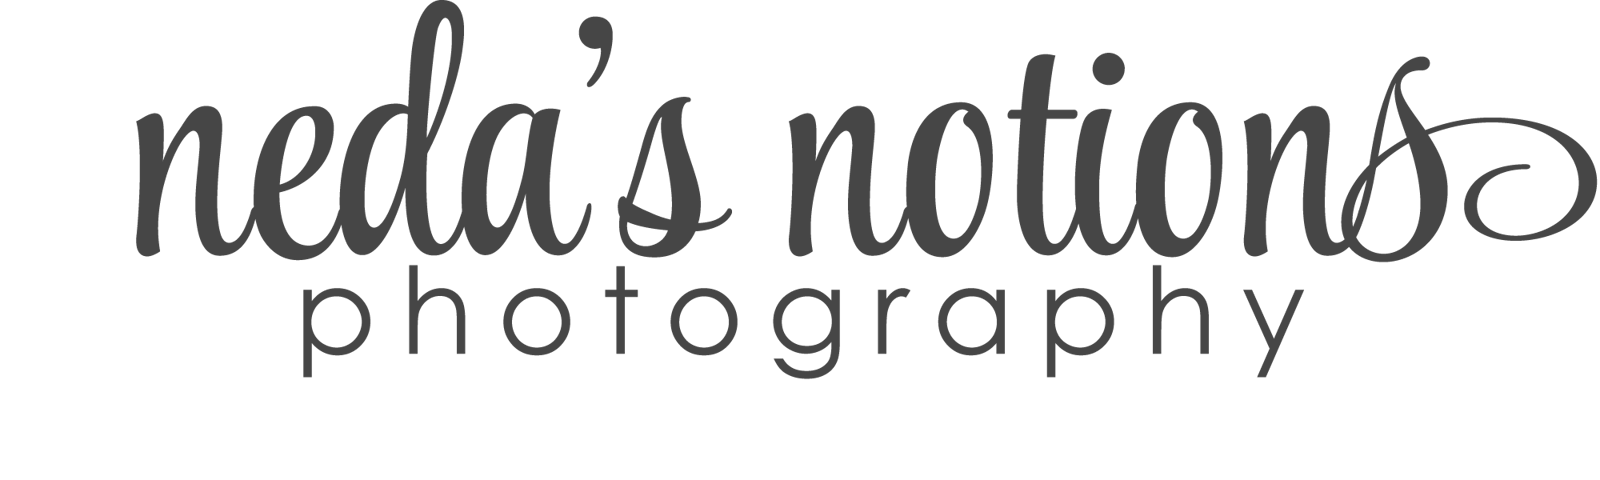 Neda's Notions Photography